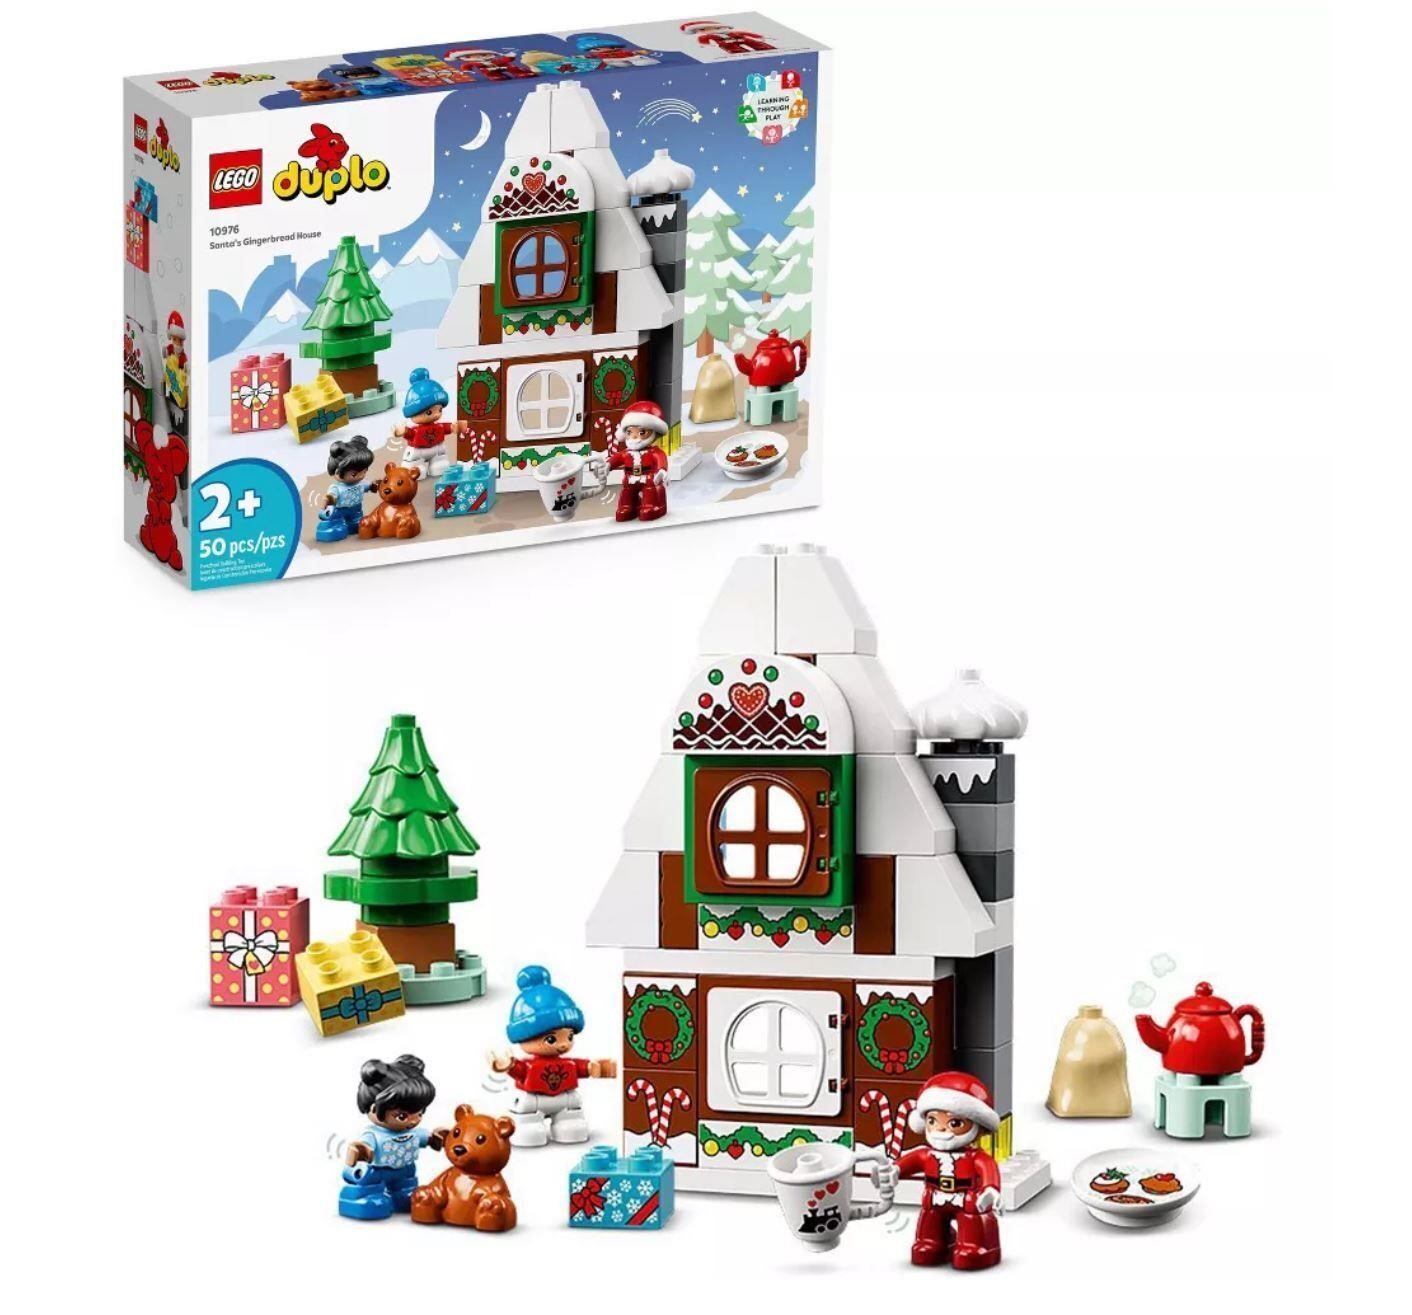 LEGO DUPLO Santa's Gingerbread House